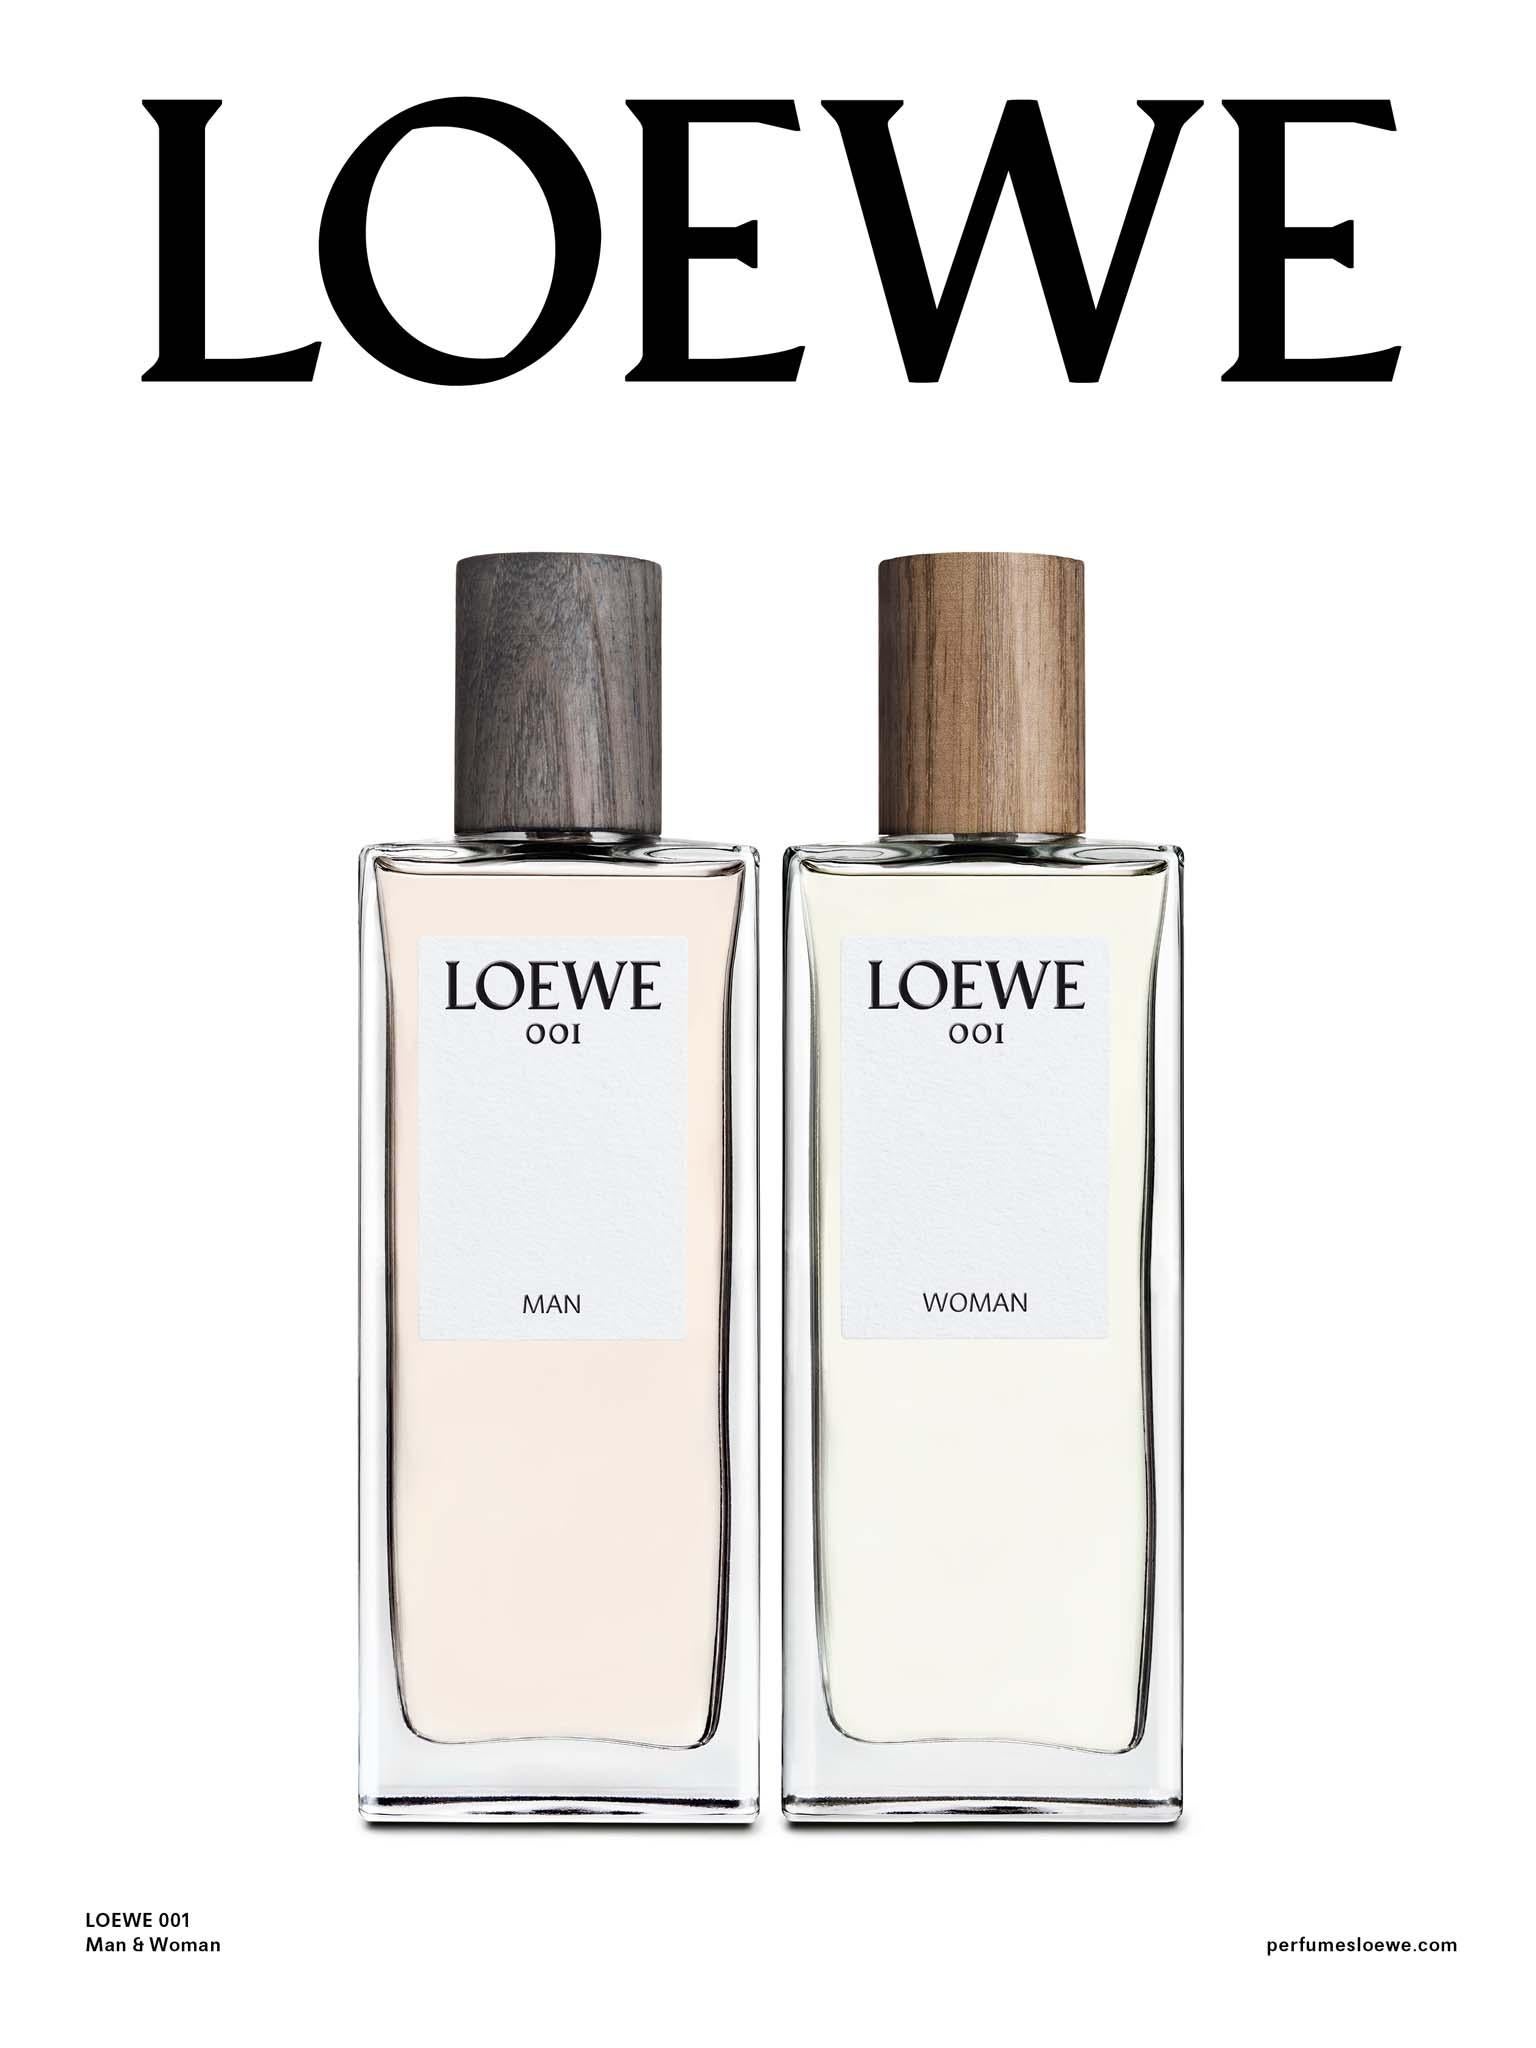 Loewe 001 Woman 50ml £61 harrods.com